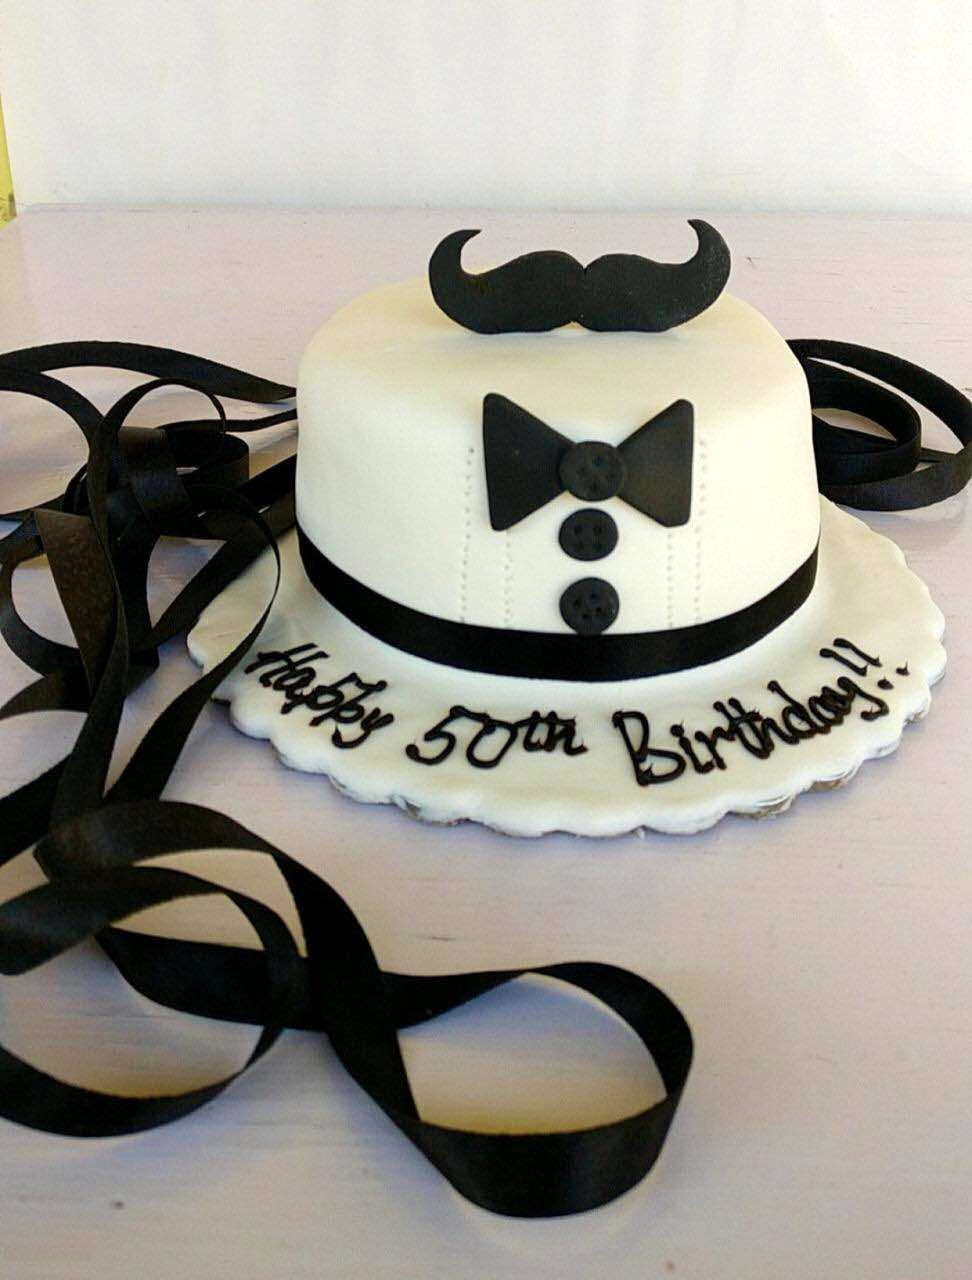 Black,Cake,Birthday cake,Fondant,Sugar cake,Sugar paste,Hat,Cake decorating,Costume accessory,Headgear